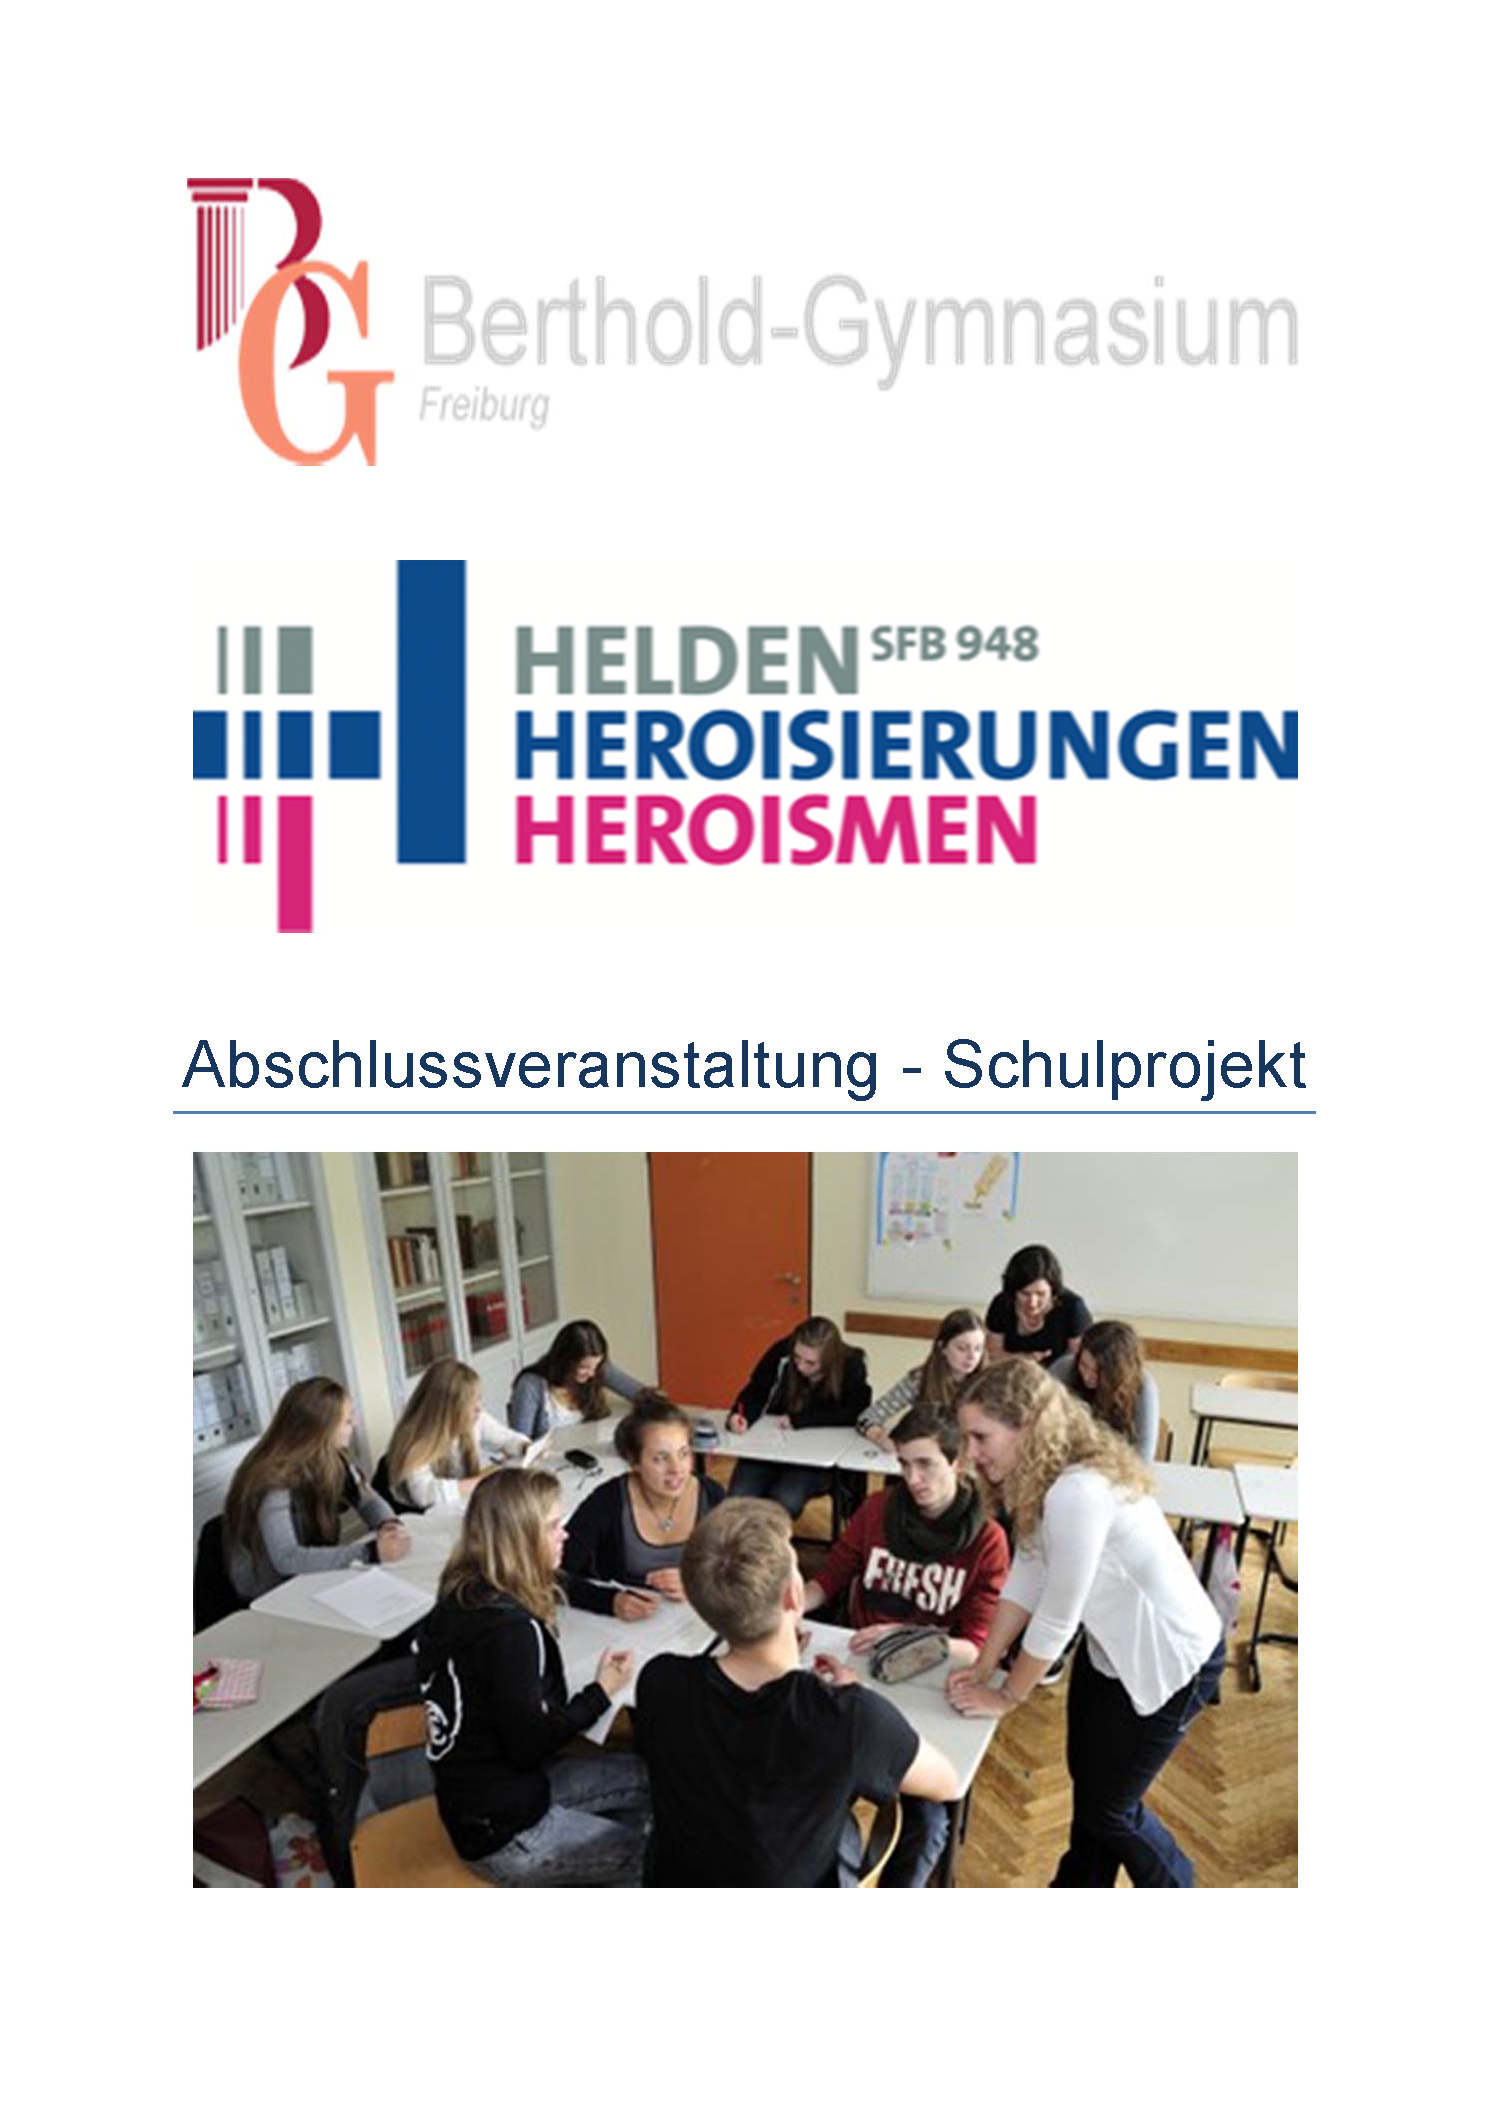 Berthold Gymnasium Plakat